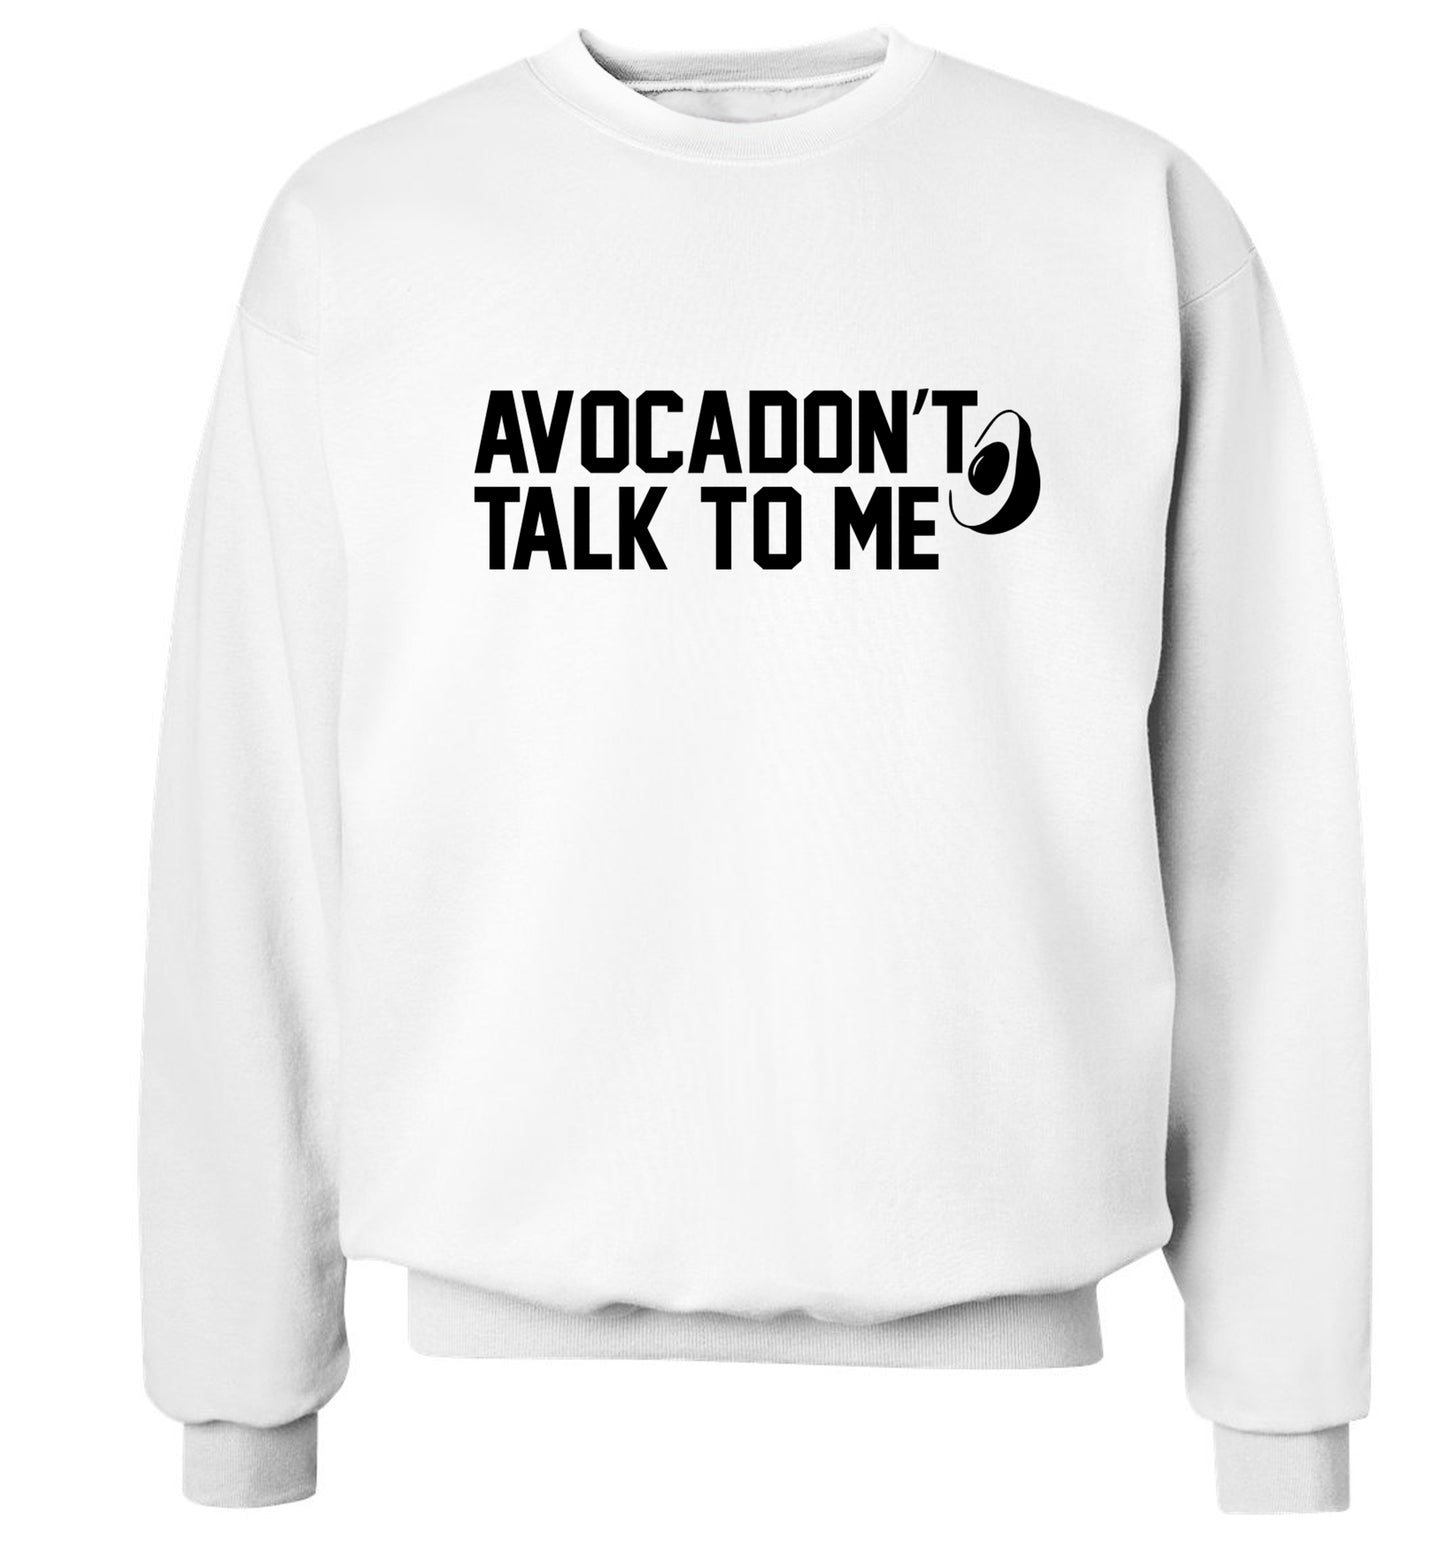 Avocadon't talk to me Adult's unisex white Sweater 2XL